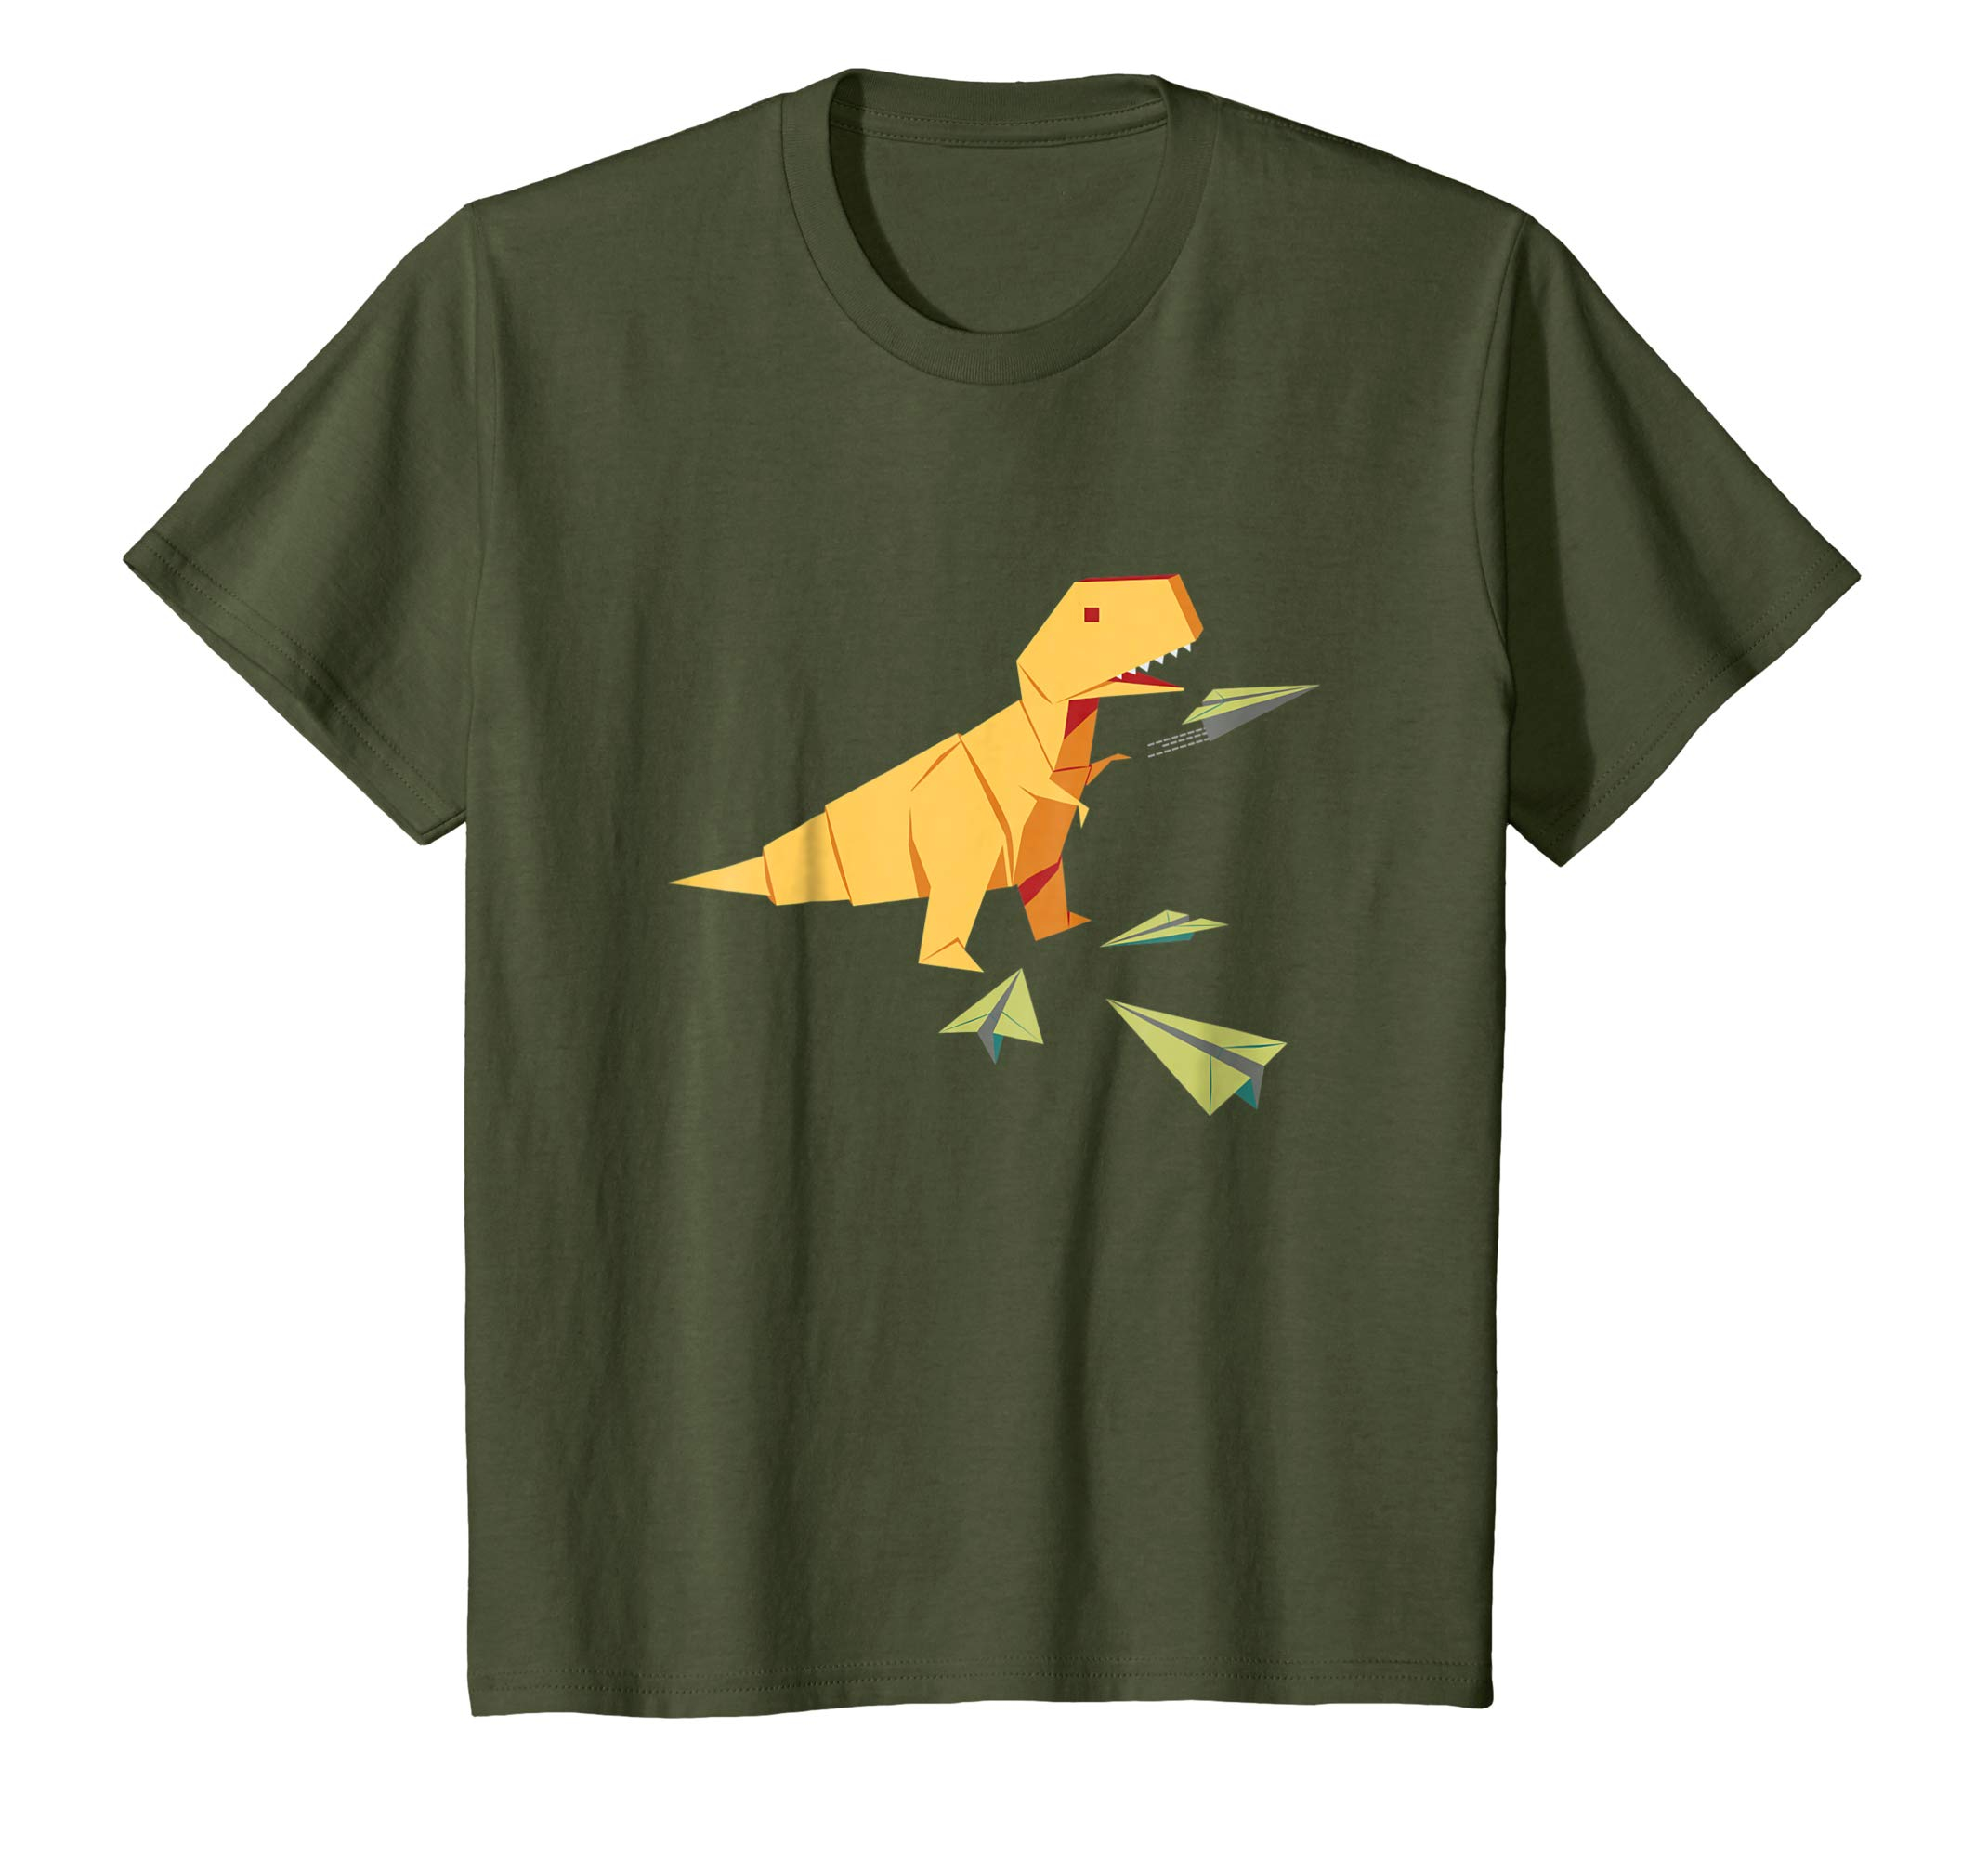 Origami Flying Dinosaur Amazon Origami T Rex Dinosaur Flying Paper Airplane T Shirt